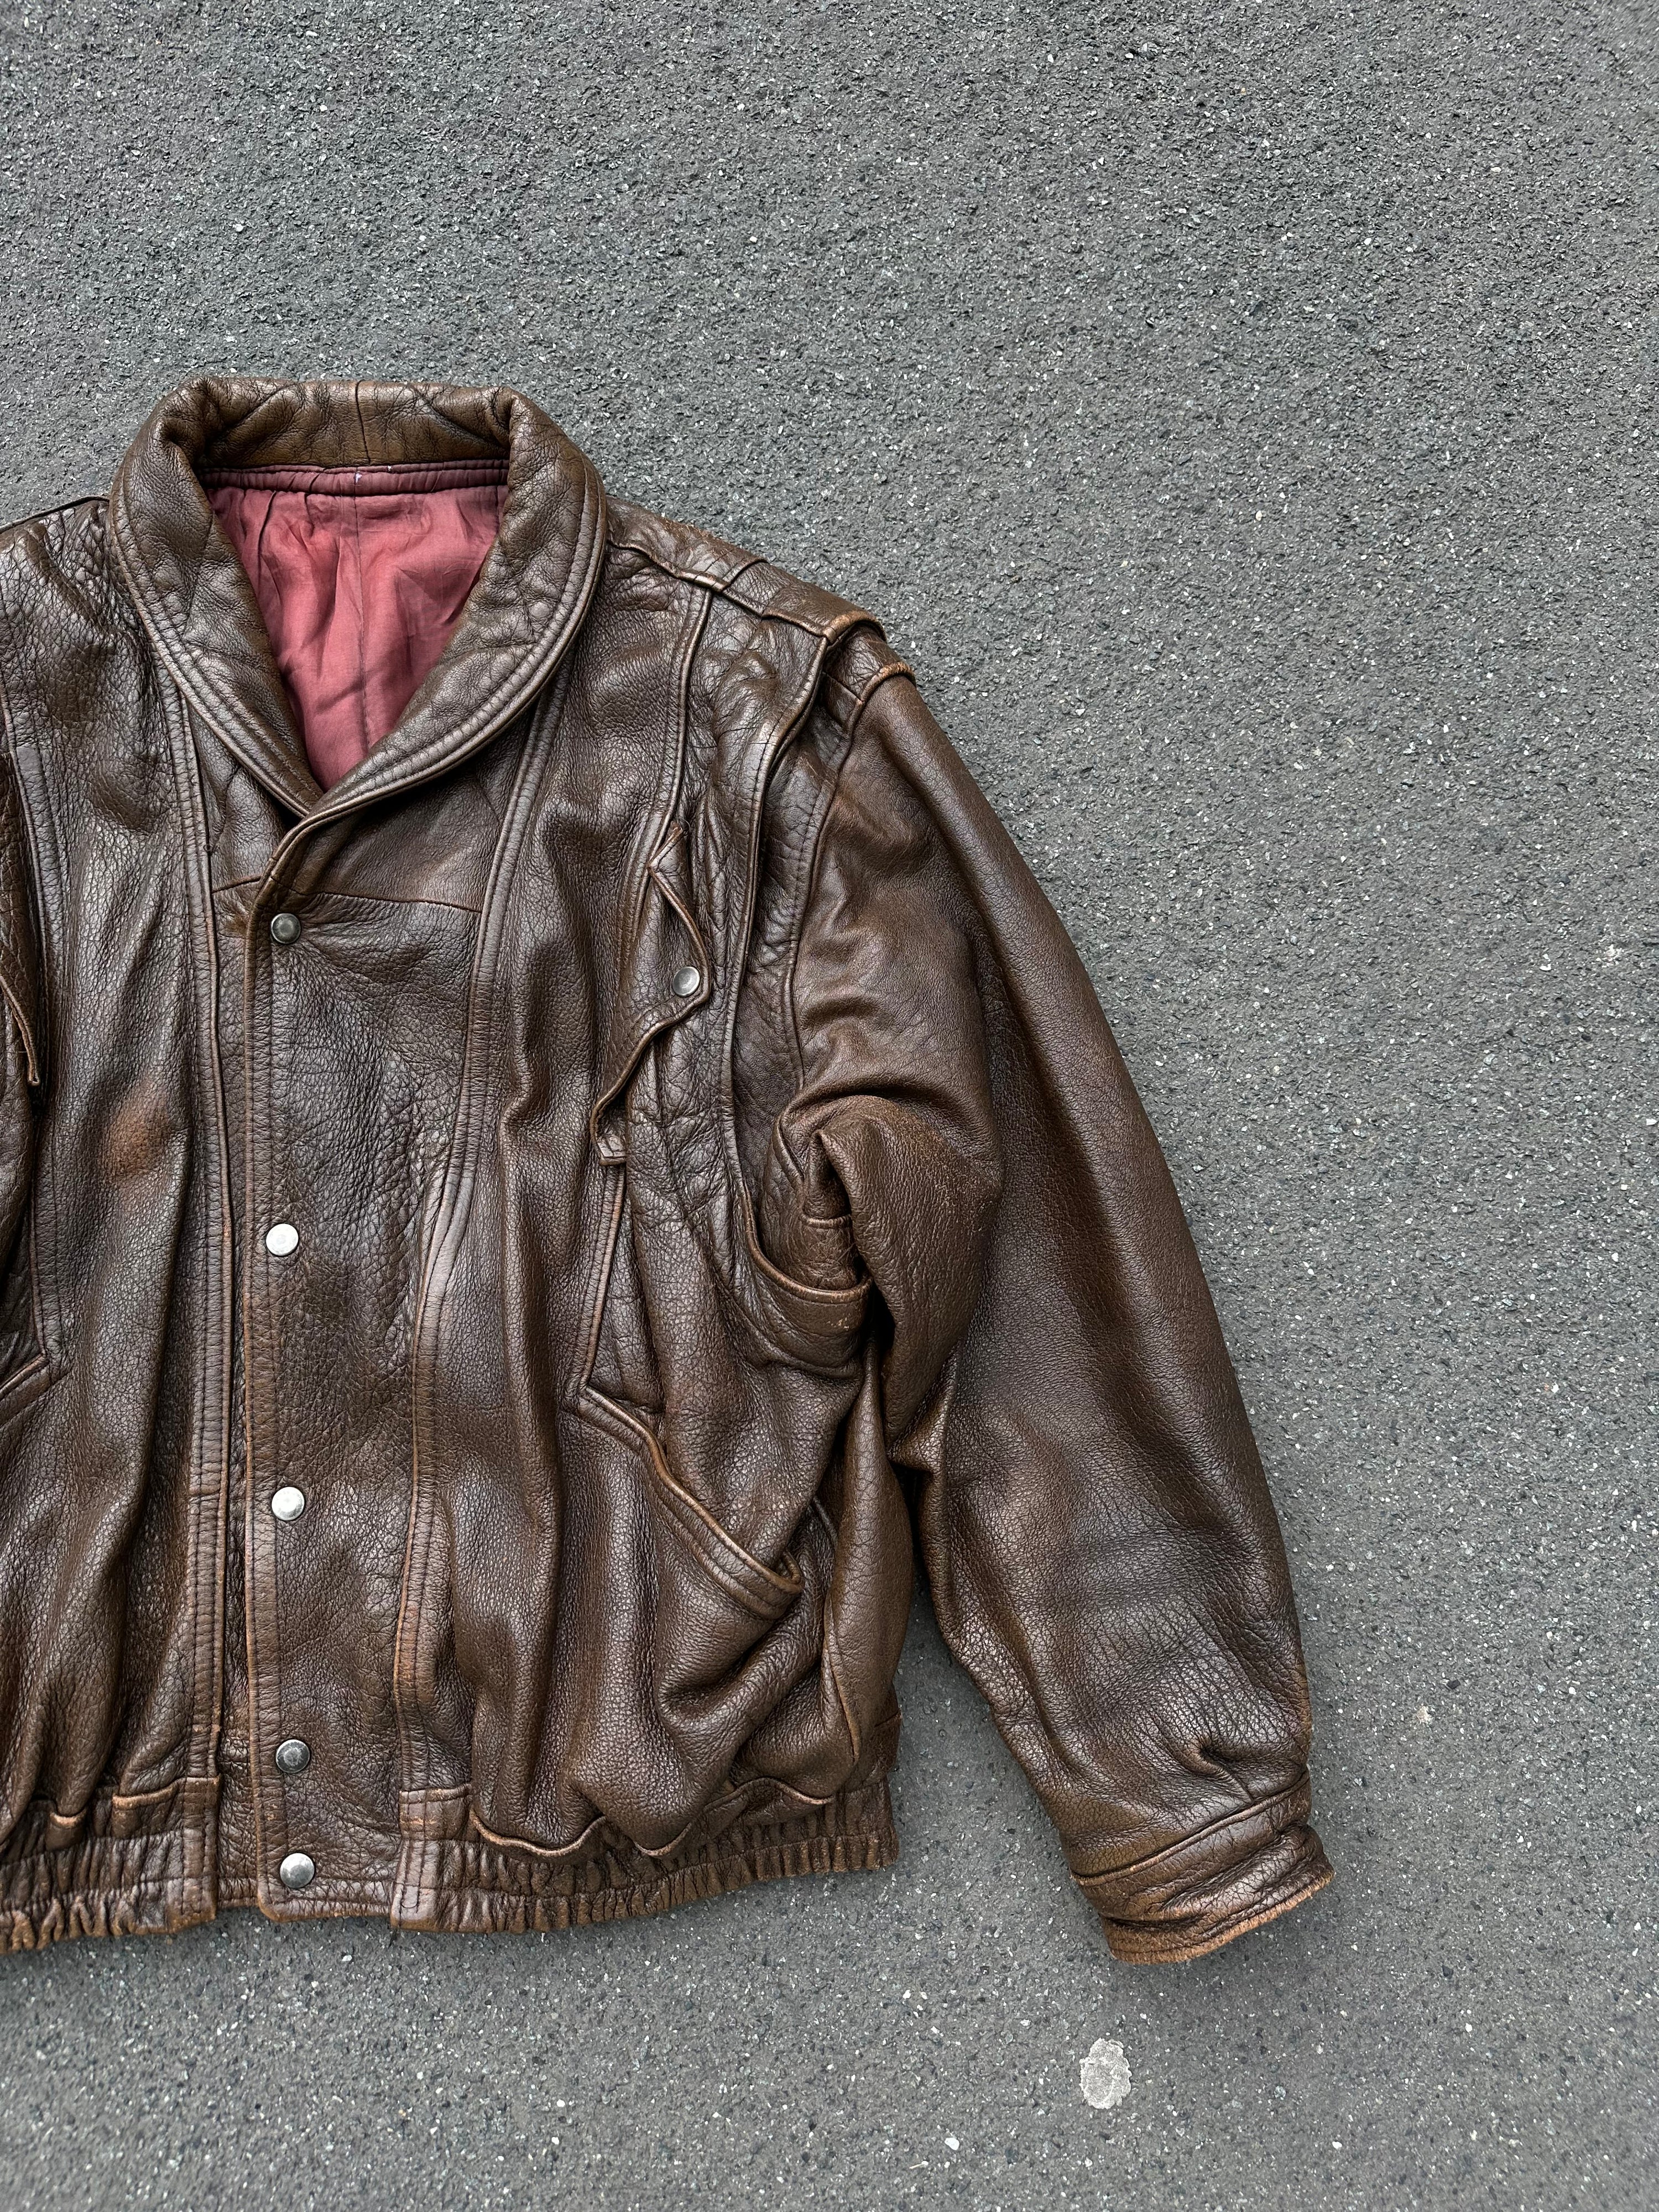 Vintage 80s 90s Leather Jacket (L/XL)